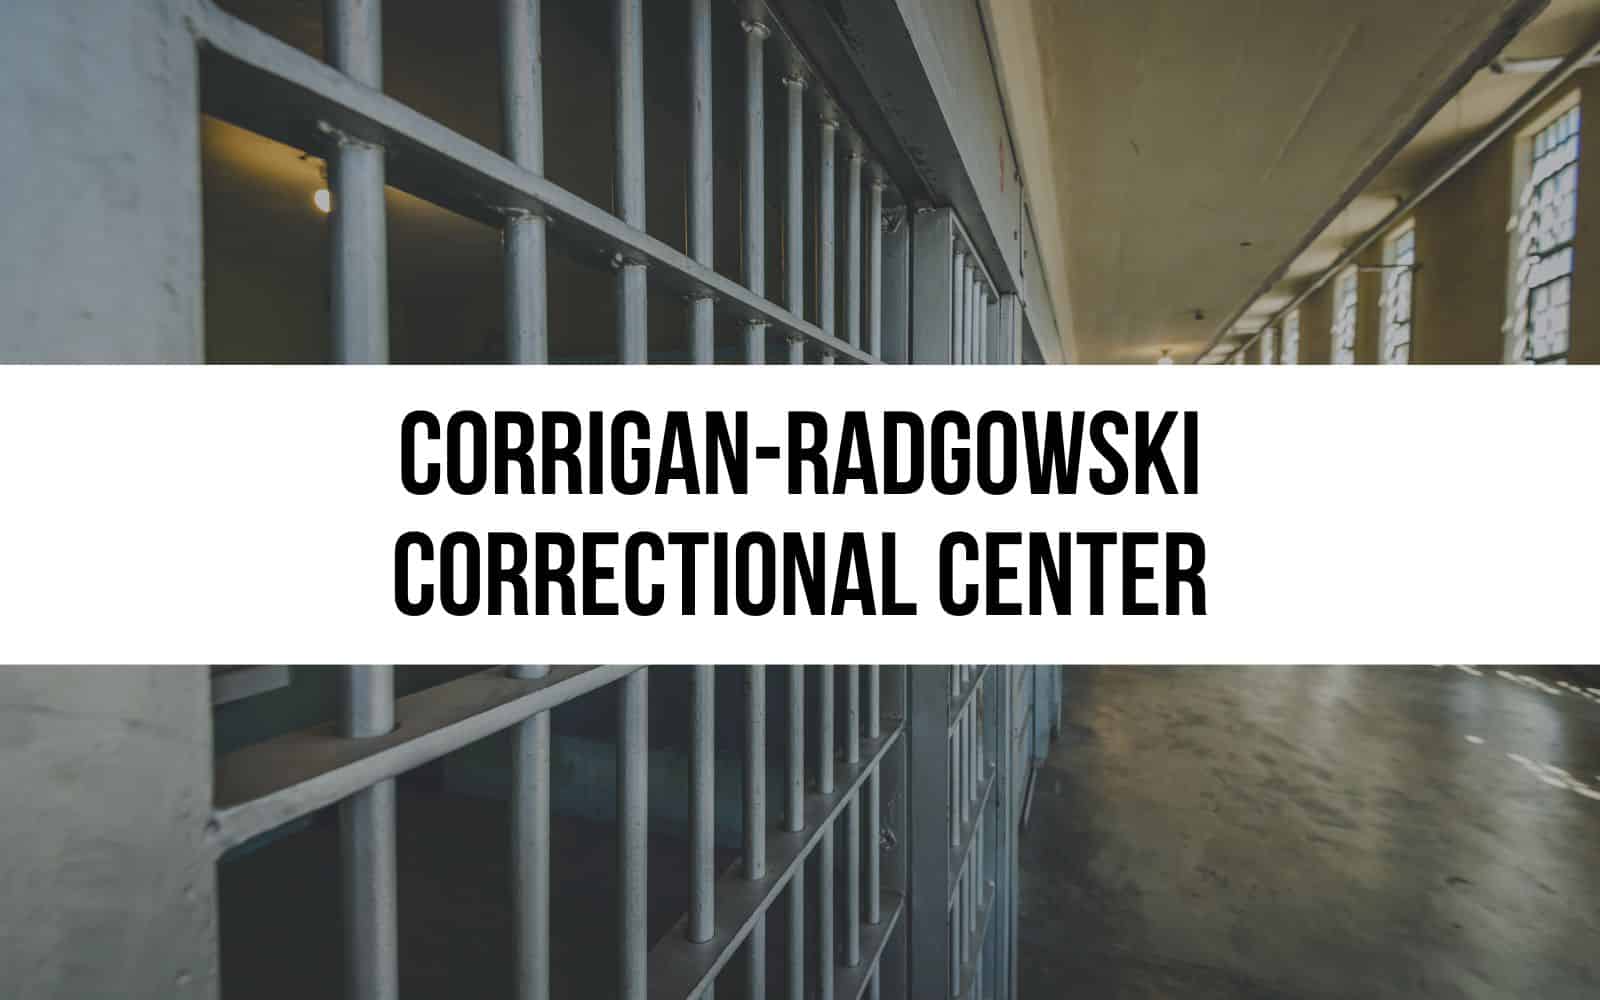 Corrigan-Radgowski Correctional Center